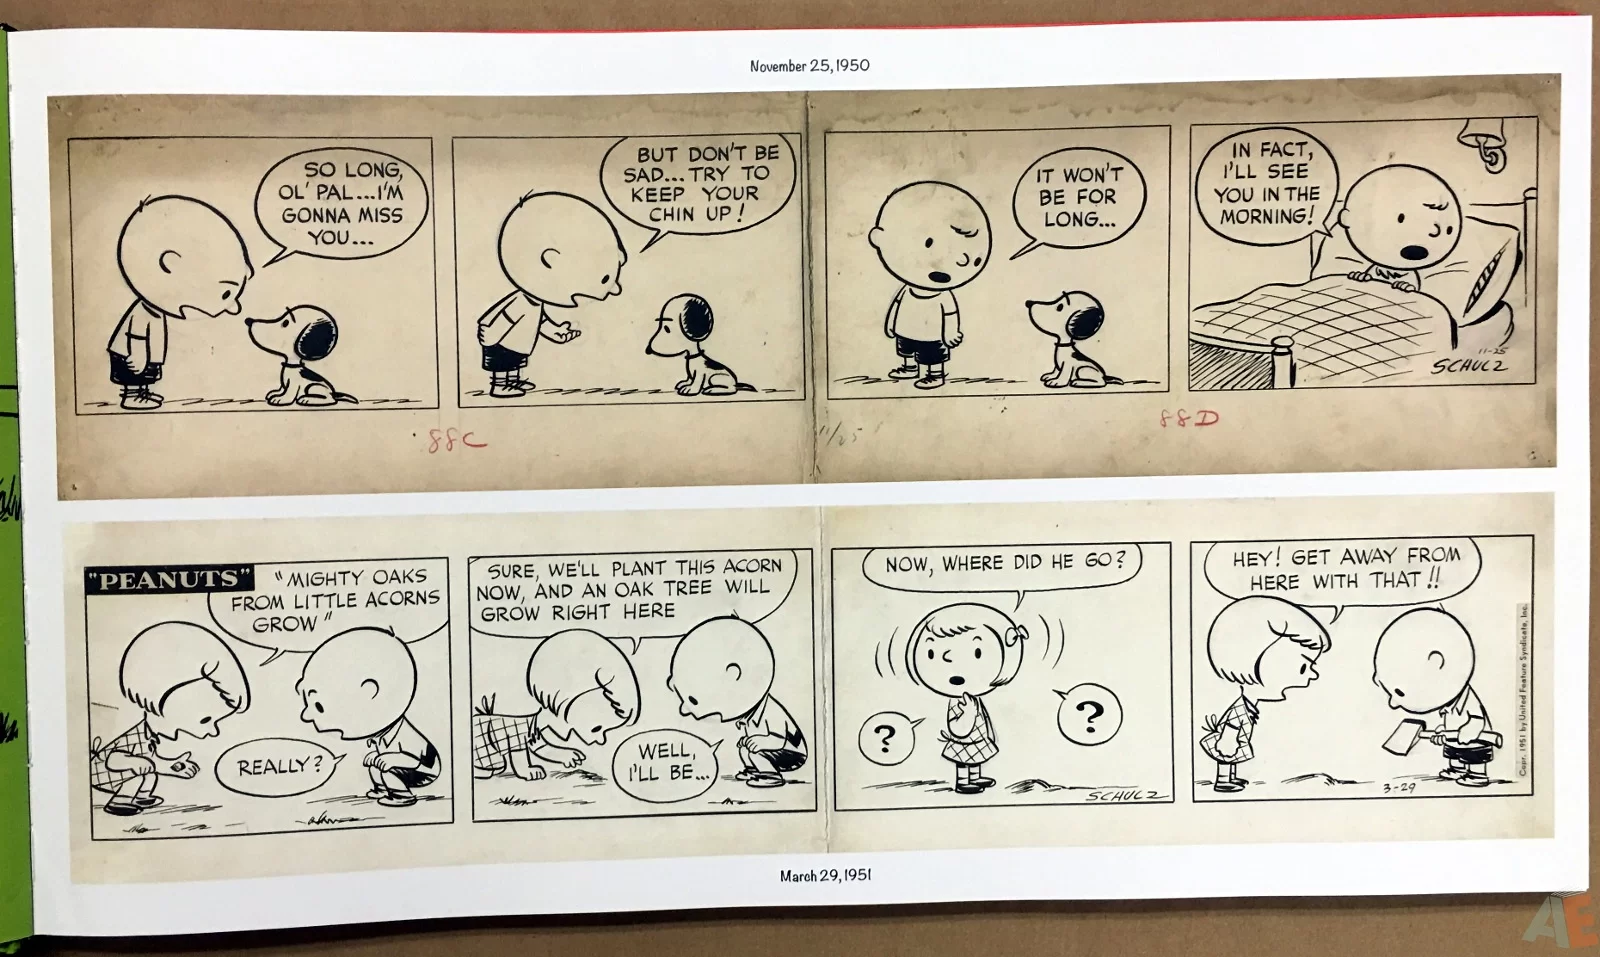 Charles M. Schulz Peanuts Artist’s Edition